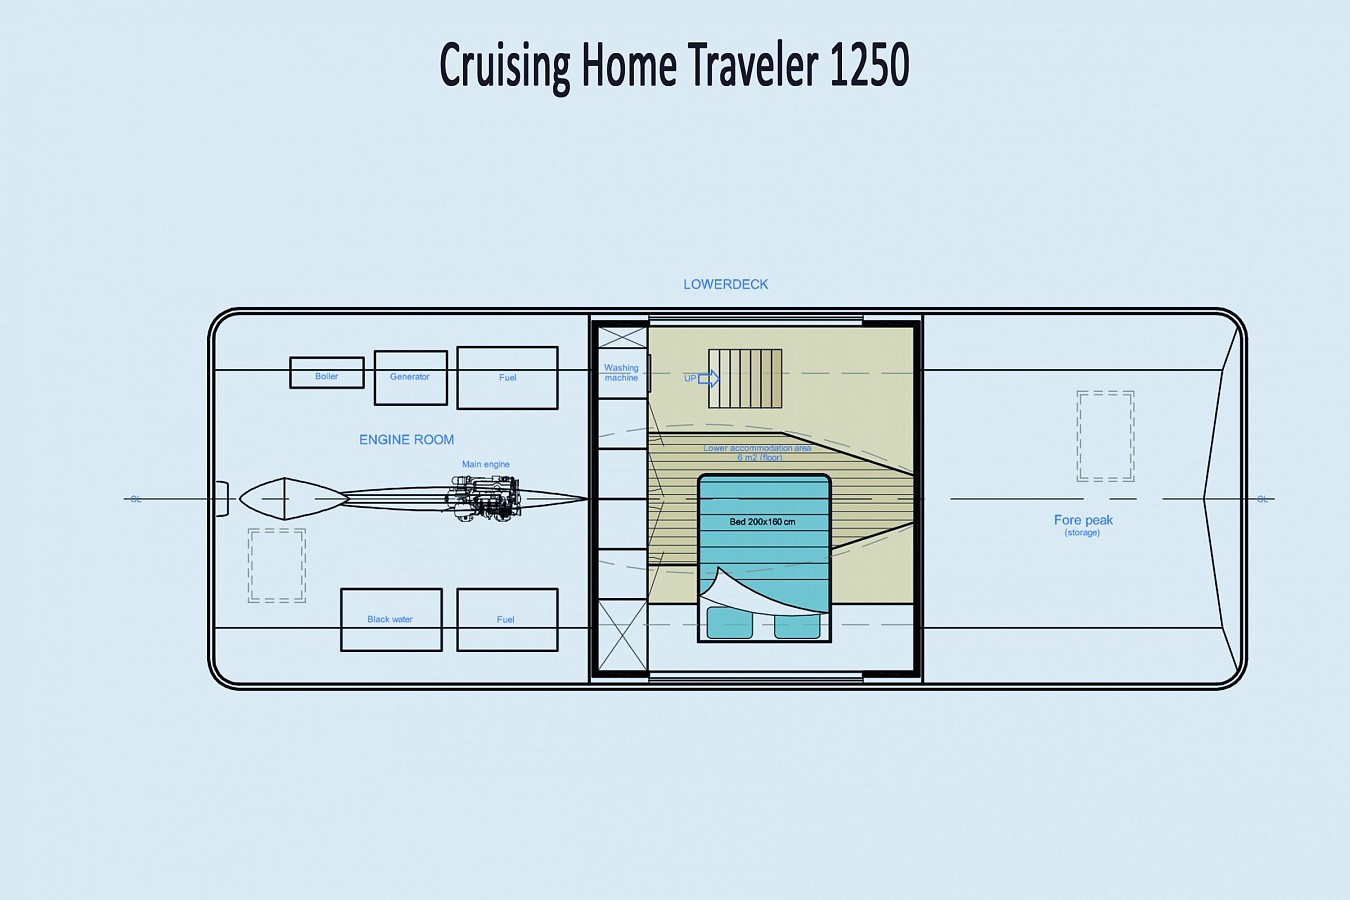 Cruising Home Traveler 1250